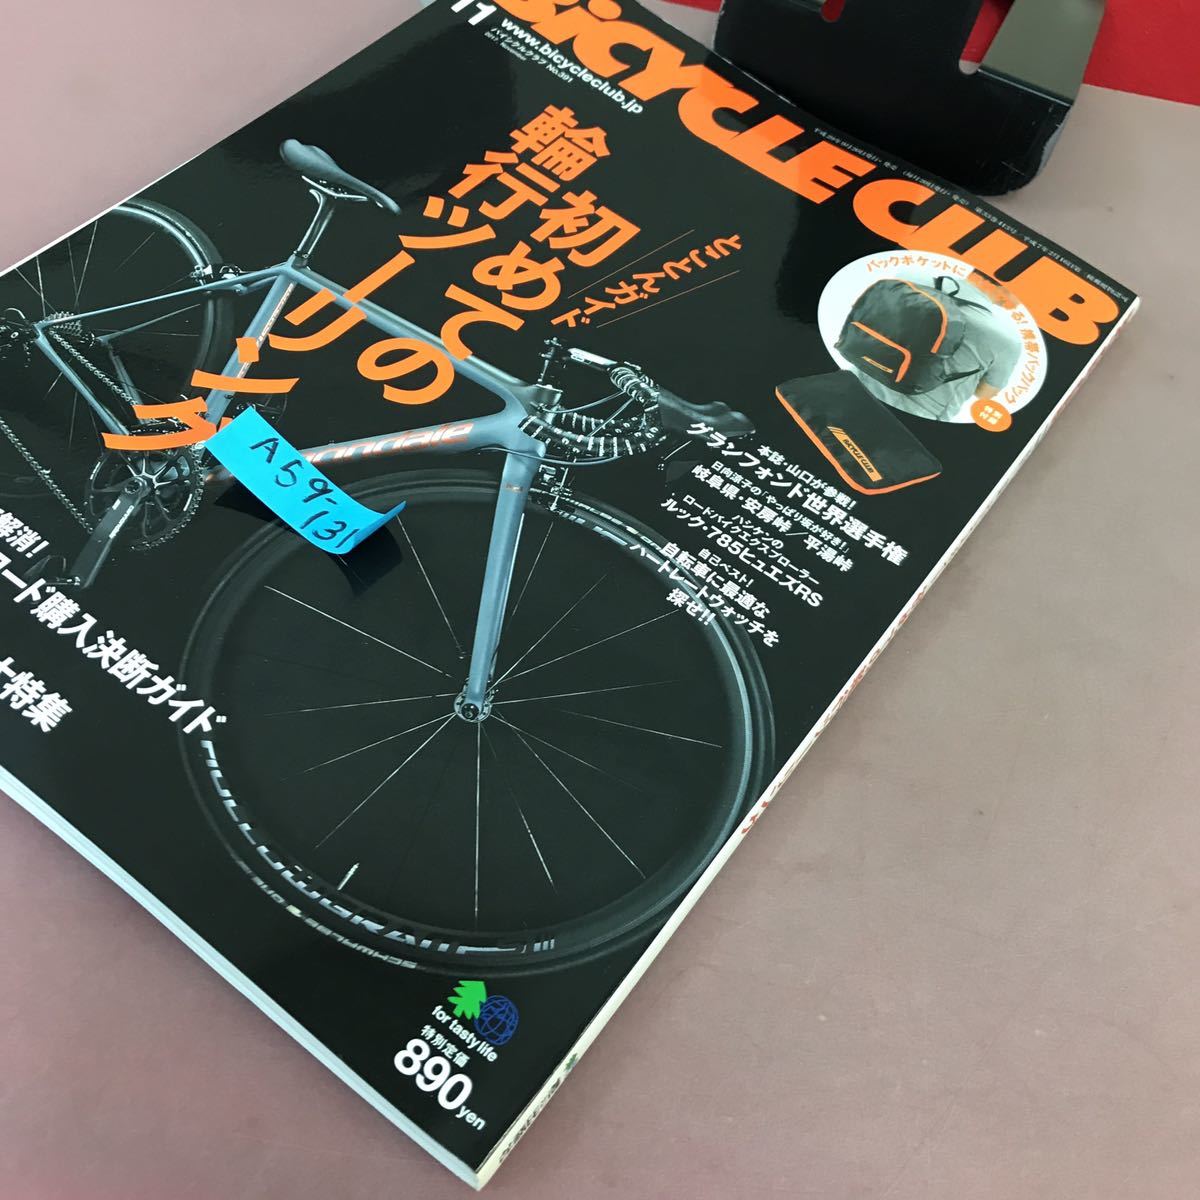 A59-131 BICYCLE CLUB 2017.11 No.391 とことんガイド 初めての蘭の輪行ツーリング 枻出版社 付録無しの画像2